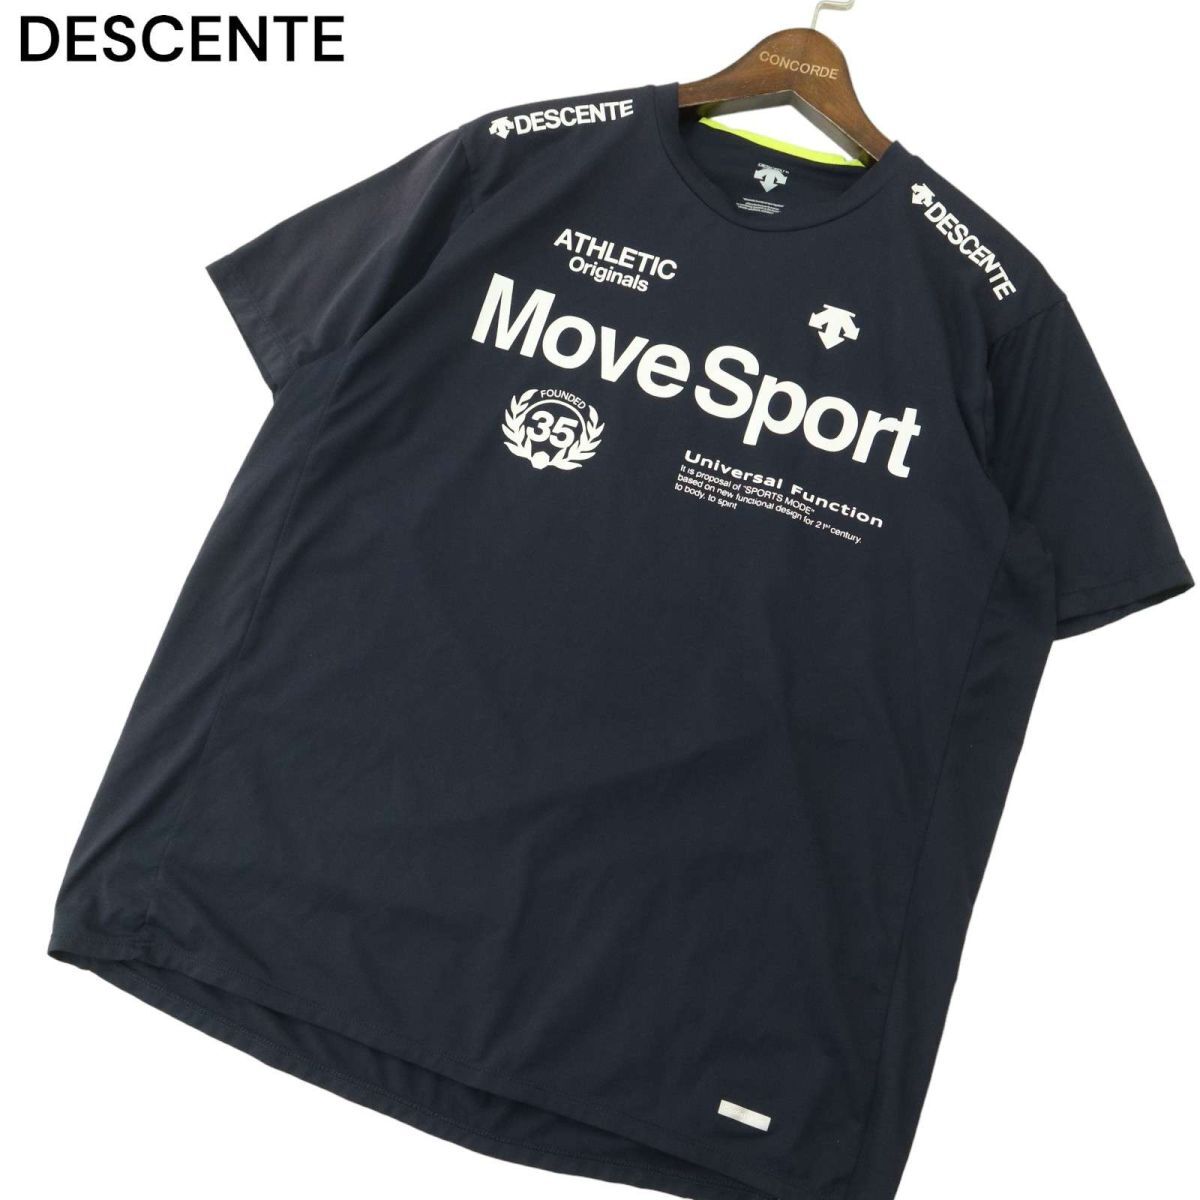 DESCENTE Descente Move Sport* Coolist D-Tec короткий рукав стрейч cut and sewn футболка Sz.O мужской темно-синий большой тренировка A4T03720_4#A